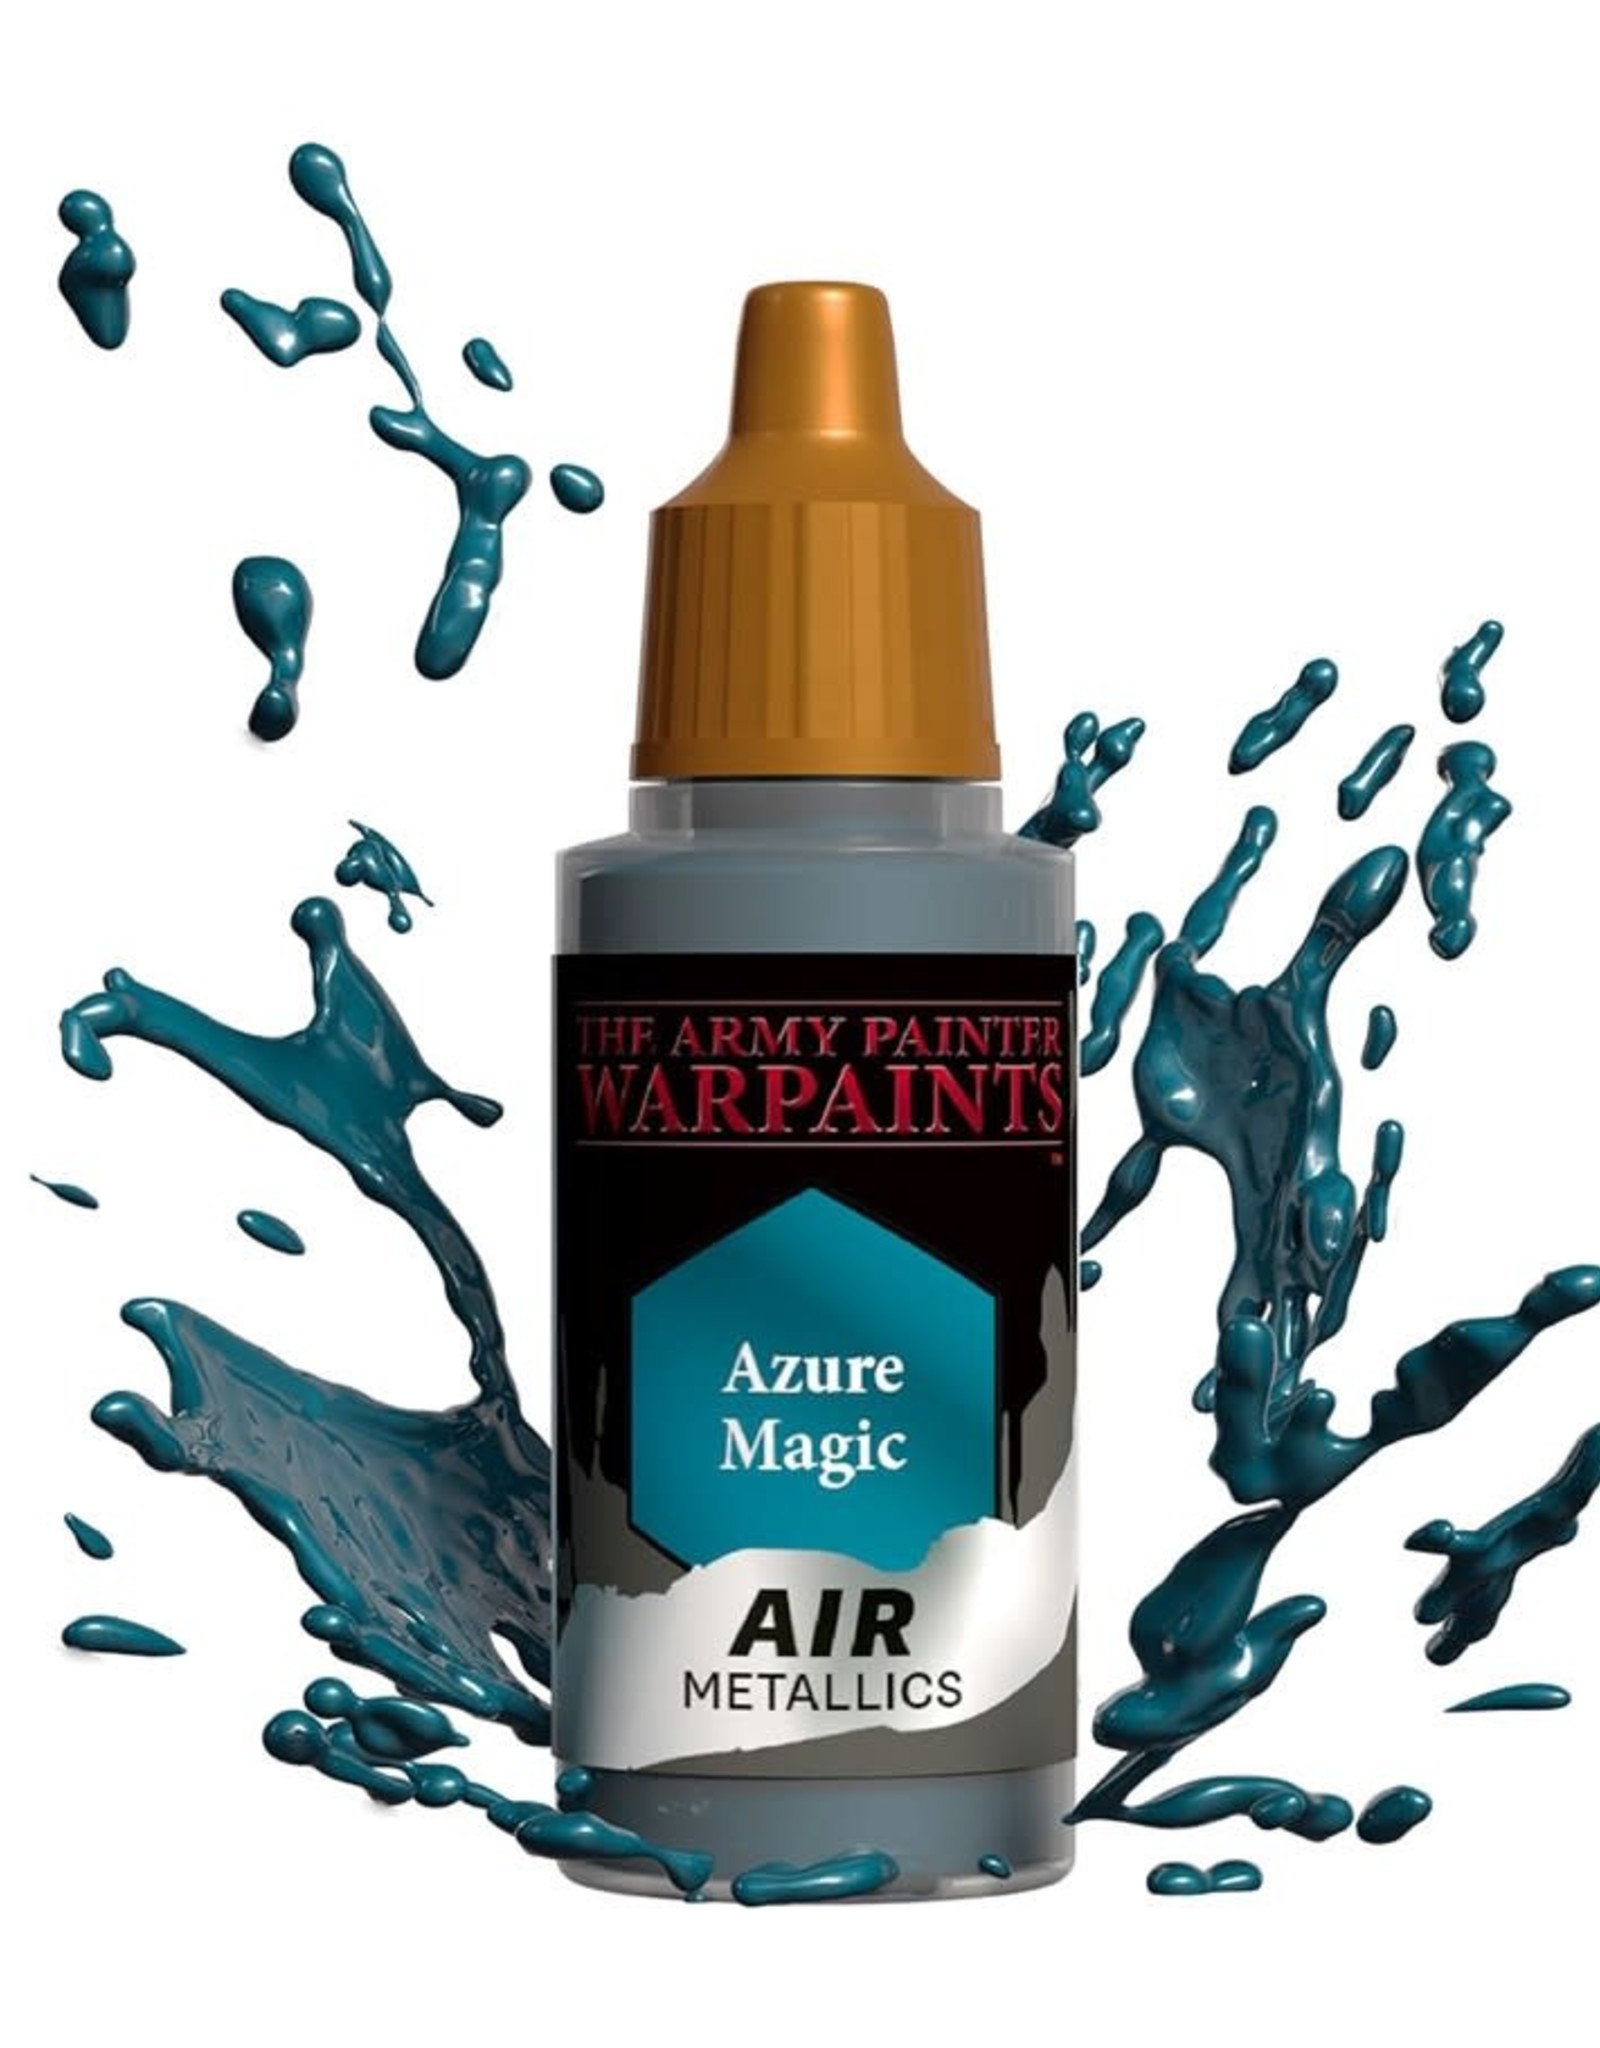 The Army Painter TAP Warpaints Air Metallics: Azure Magic